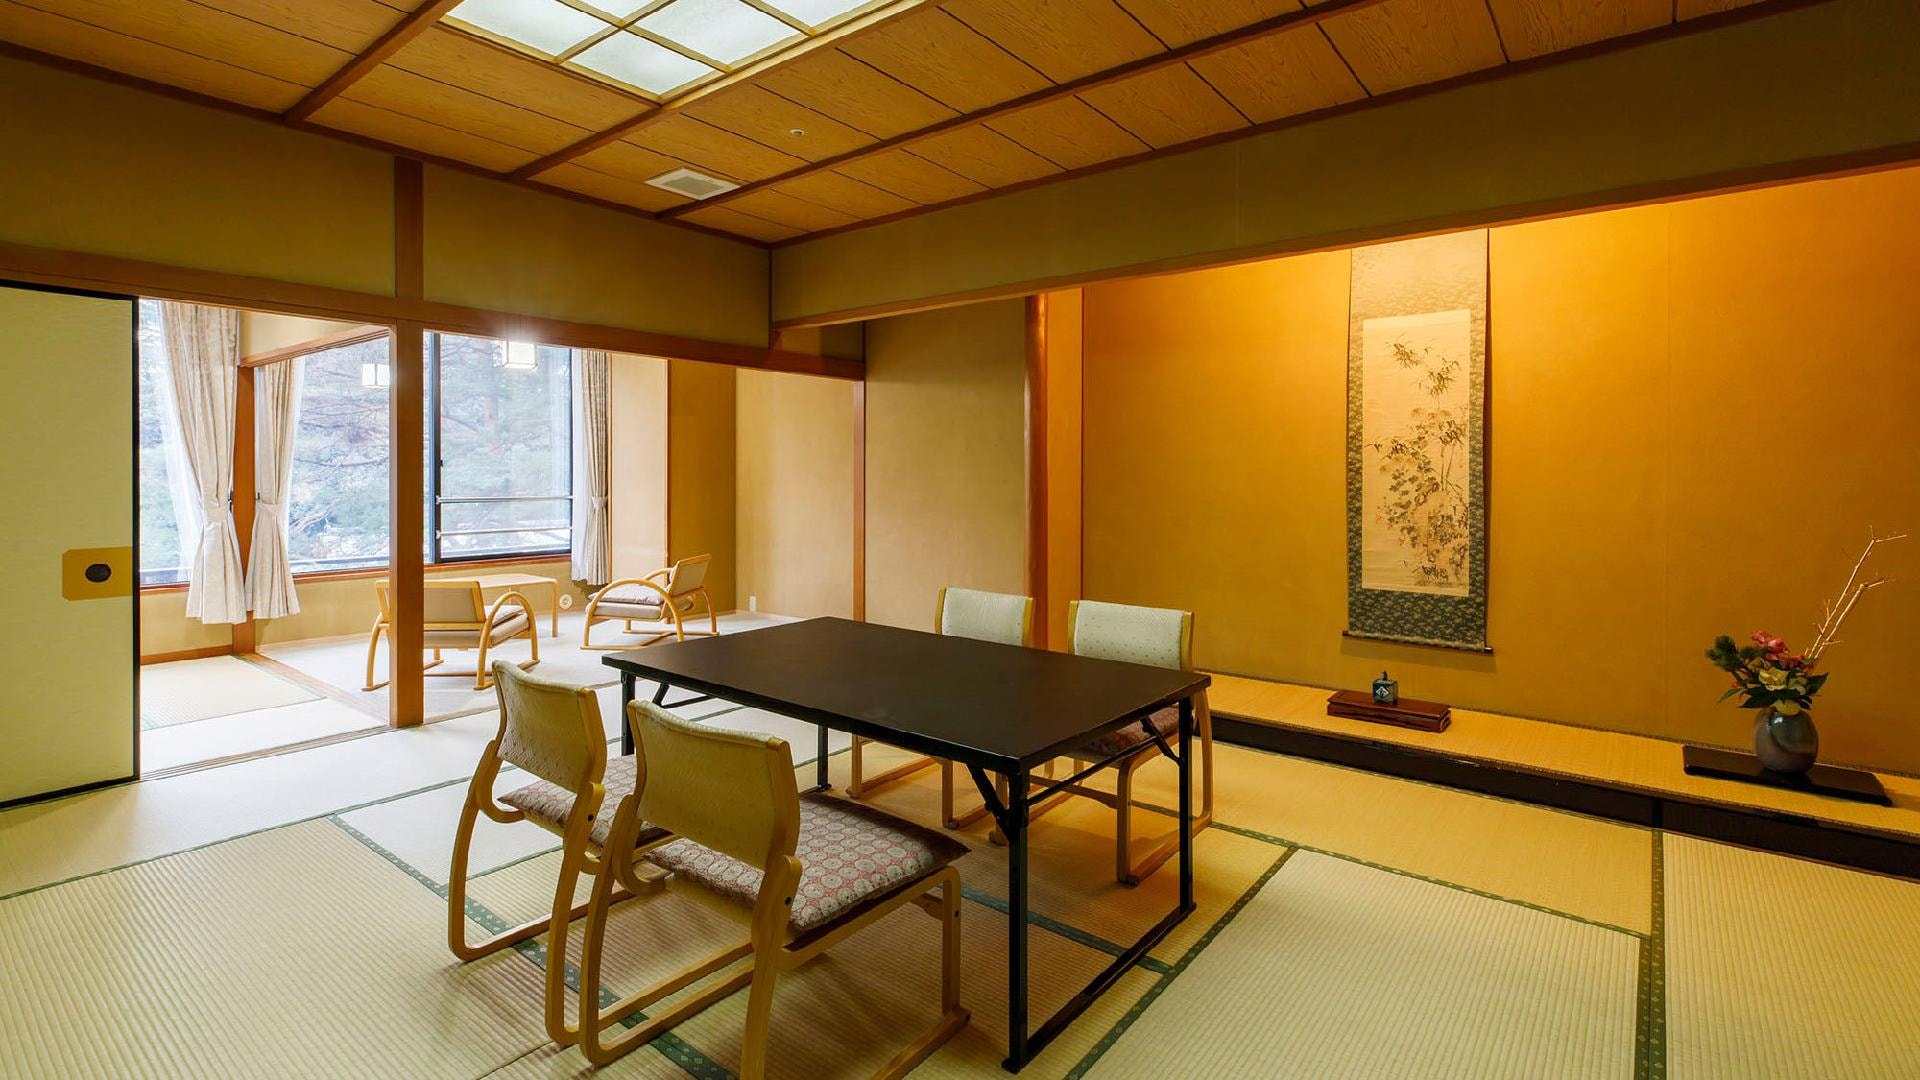 Ruiyun Japanese-style room 15 tatami mats